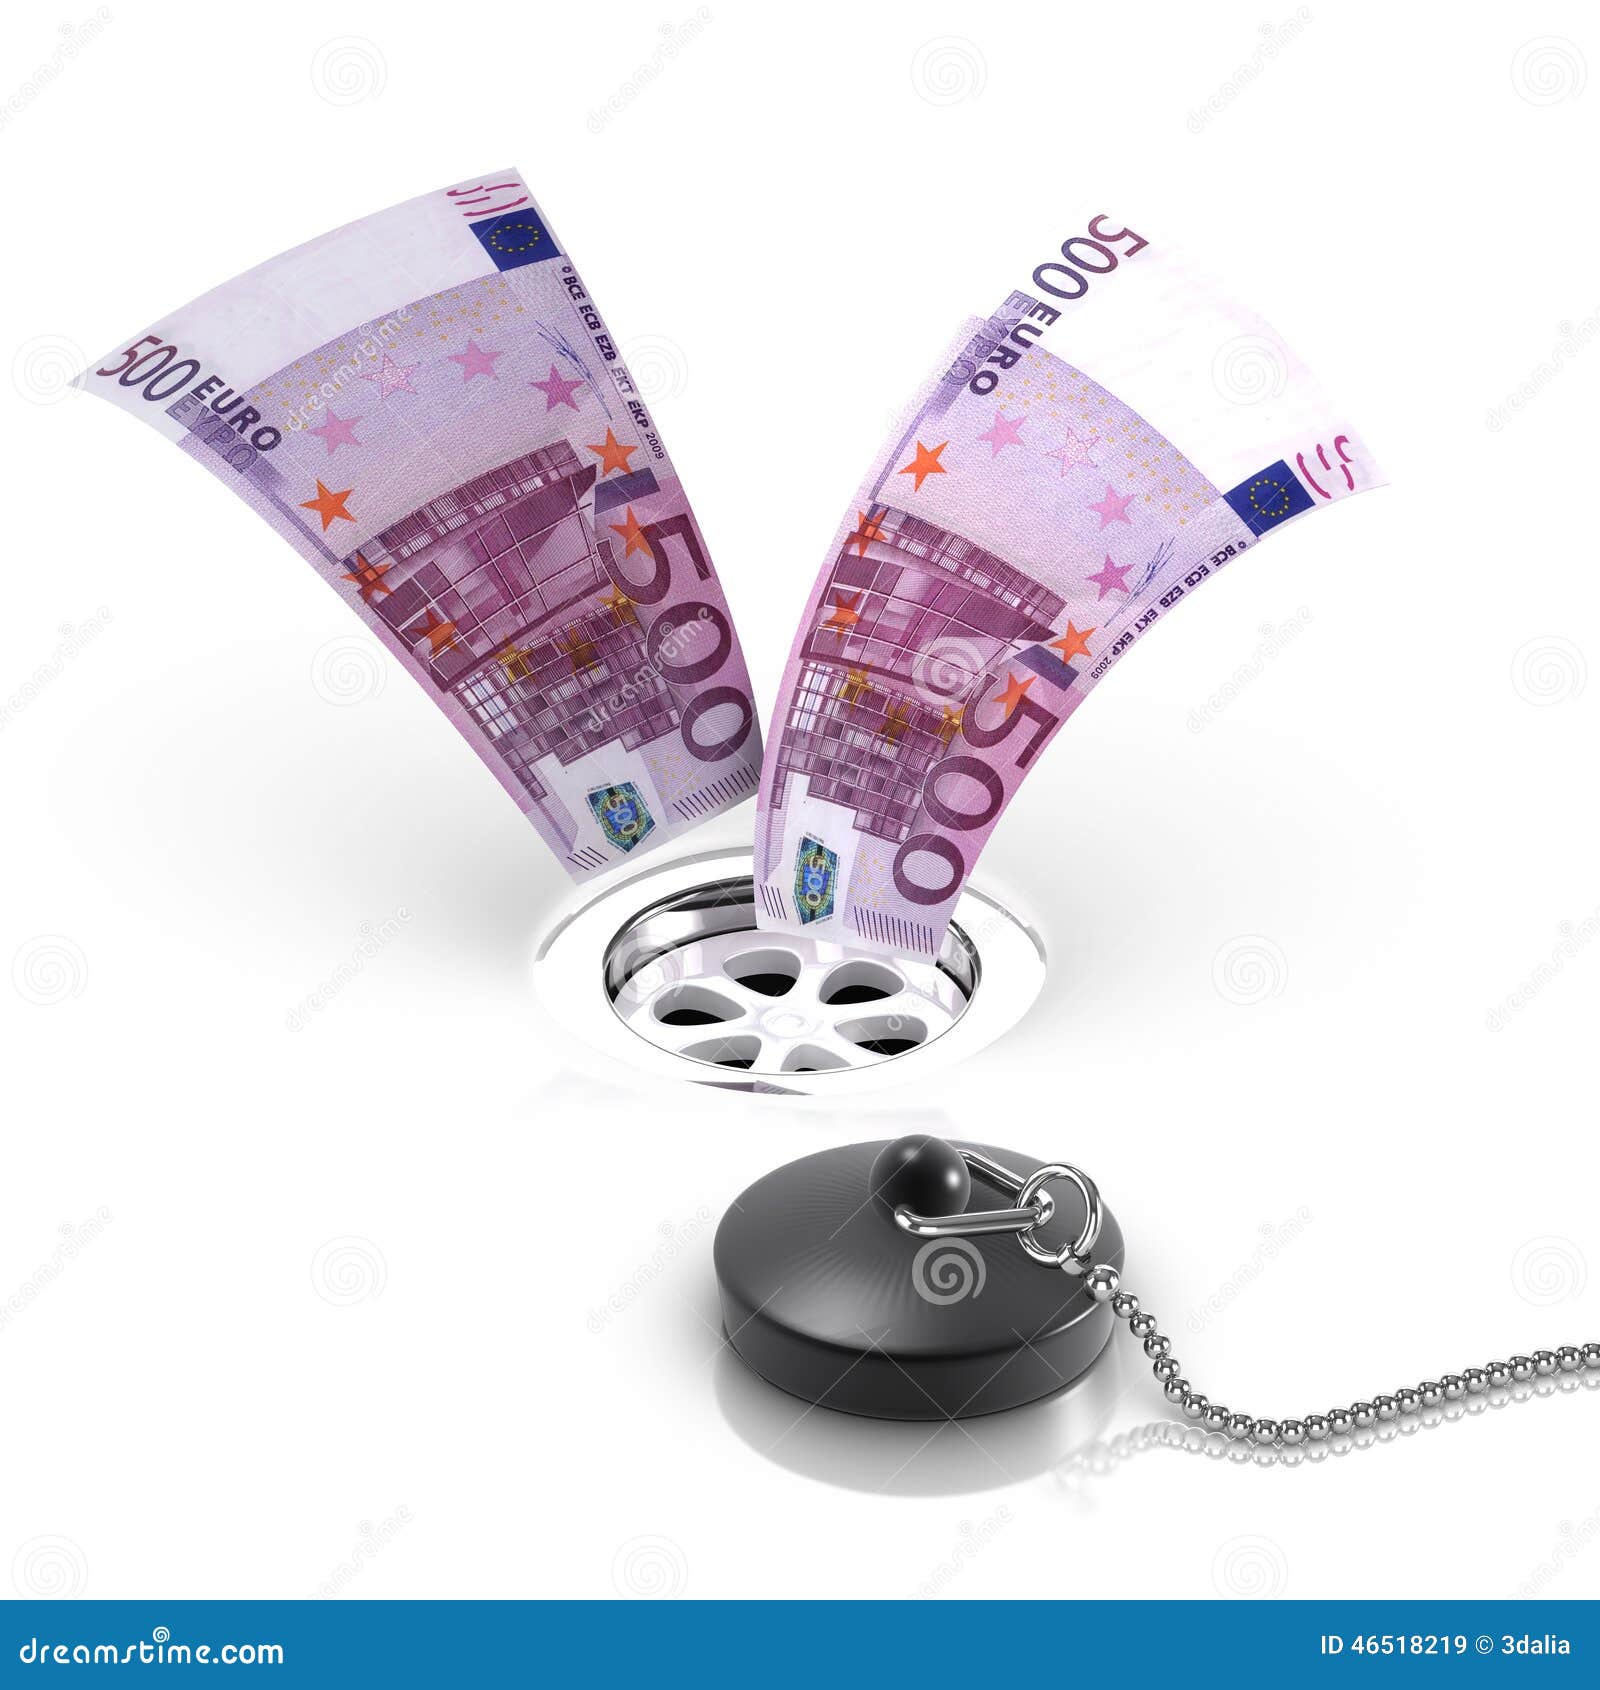 d-euro-s-down-drain-render-bank-notes-fl